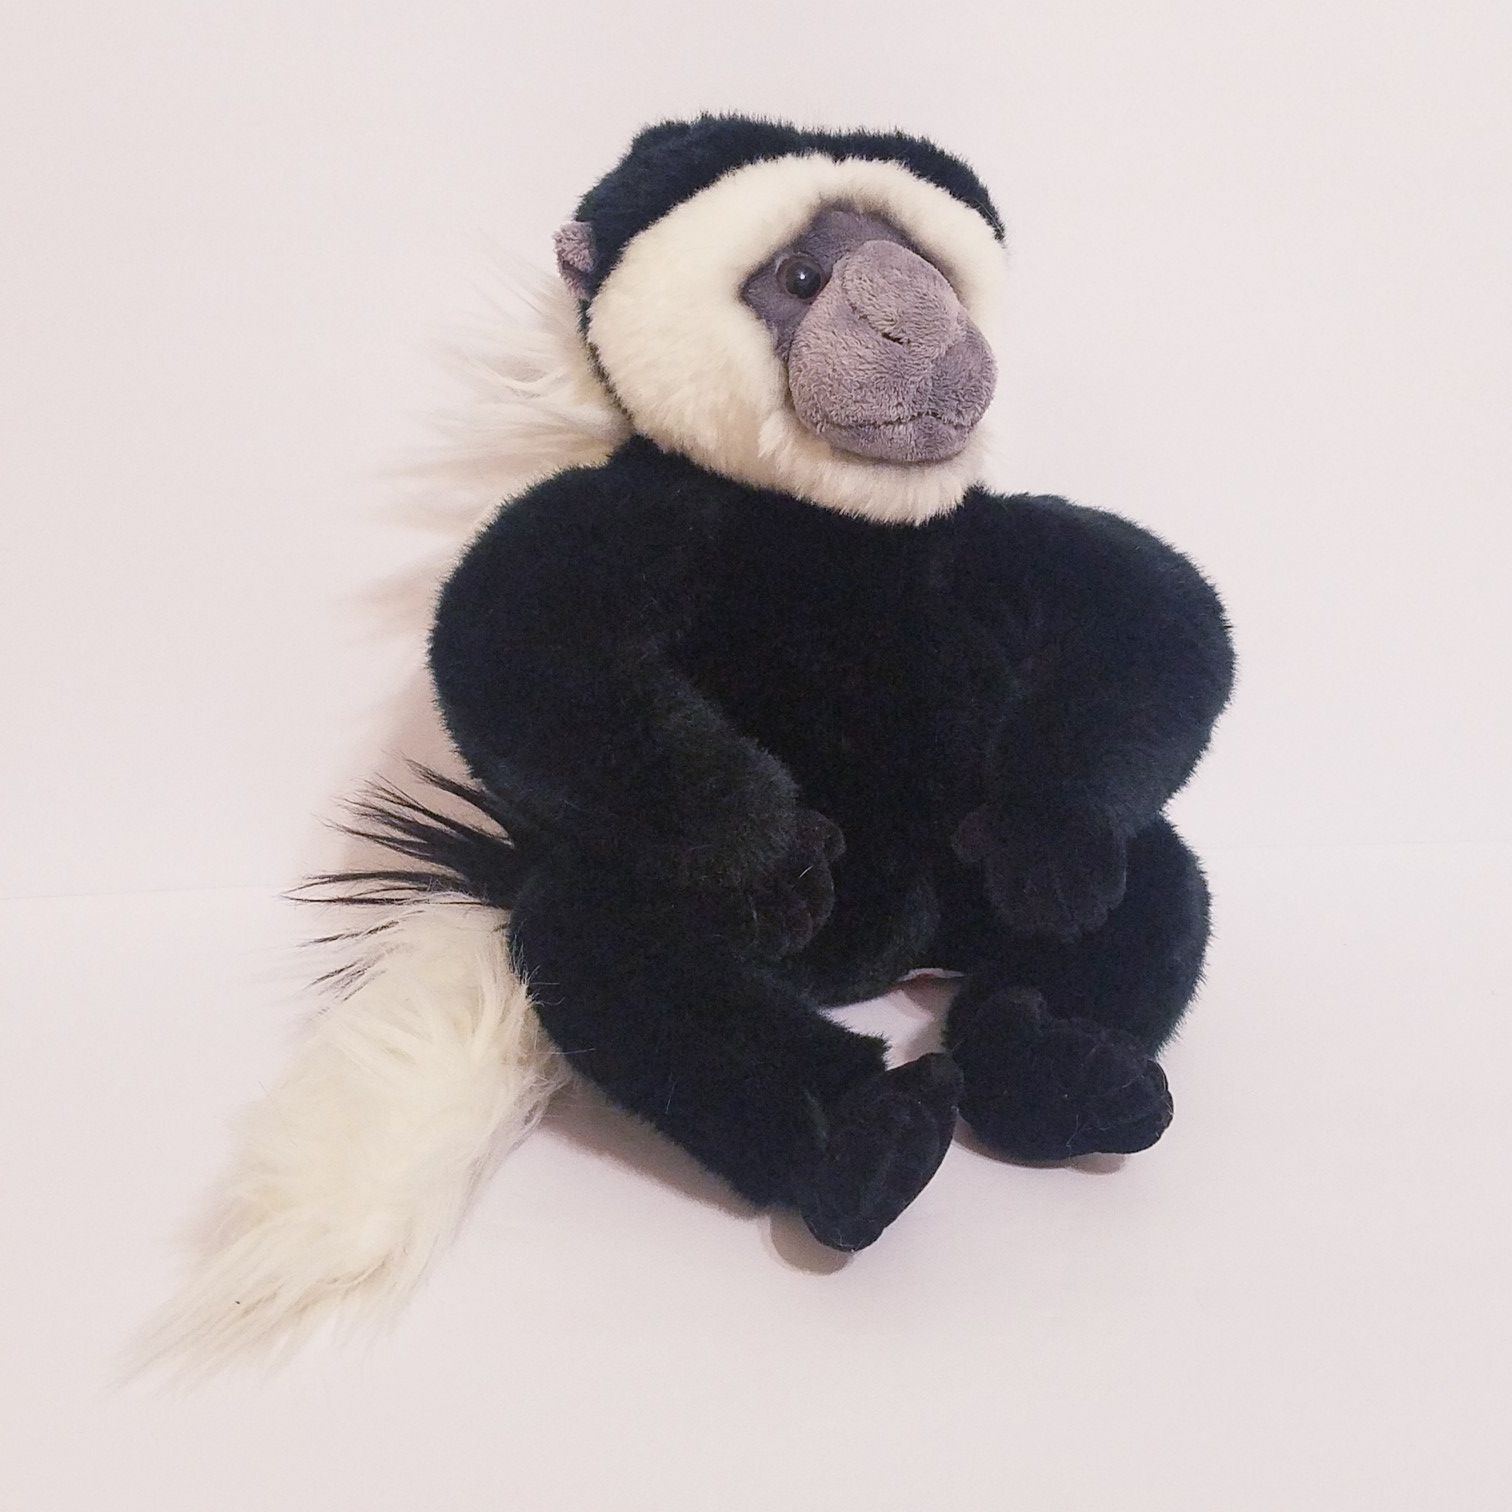 Aurora COLOBUS Monkey Black & White Plush 12" Stuffed Animal Toy Gray Chimp Ape